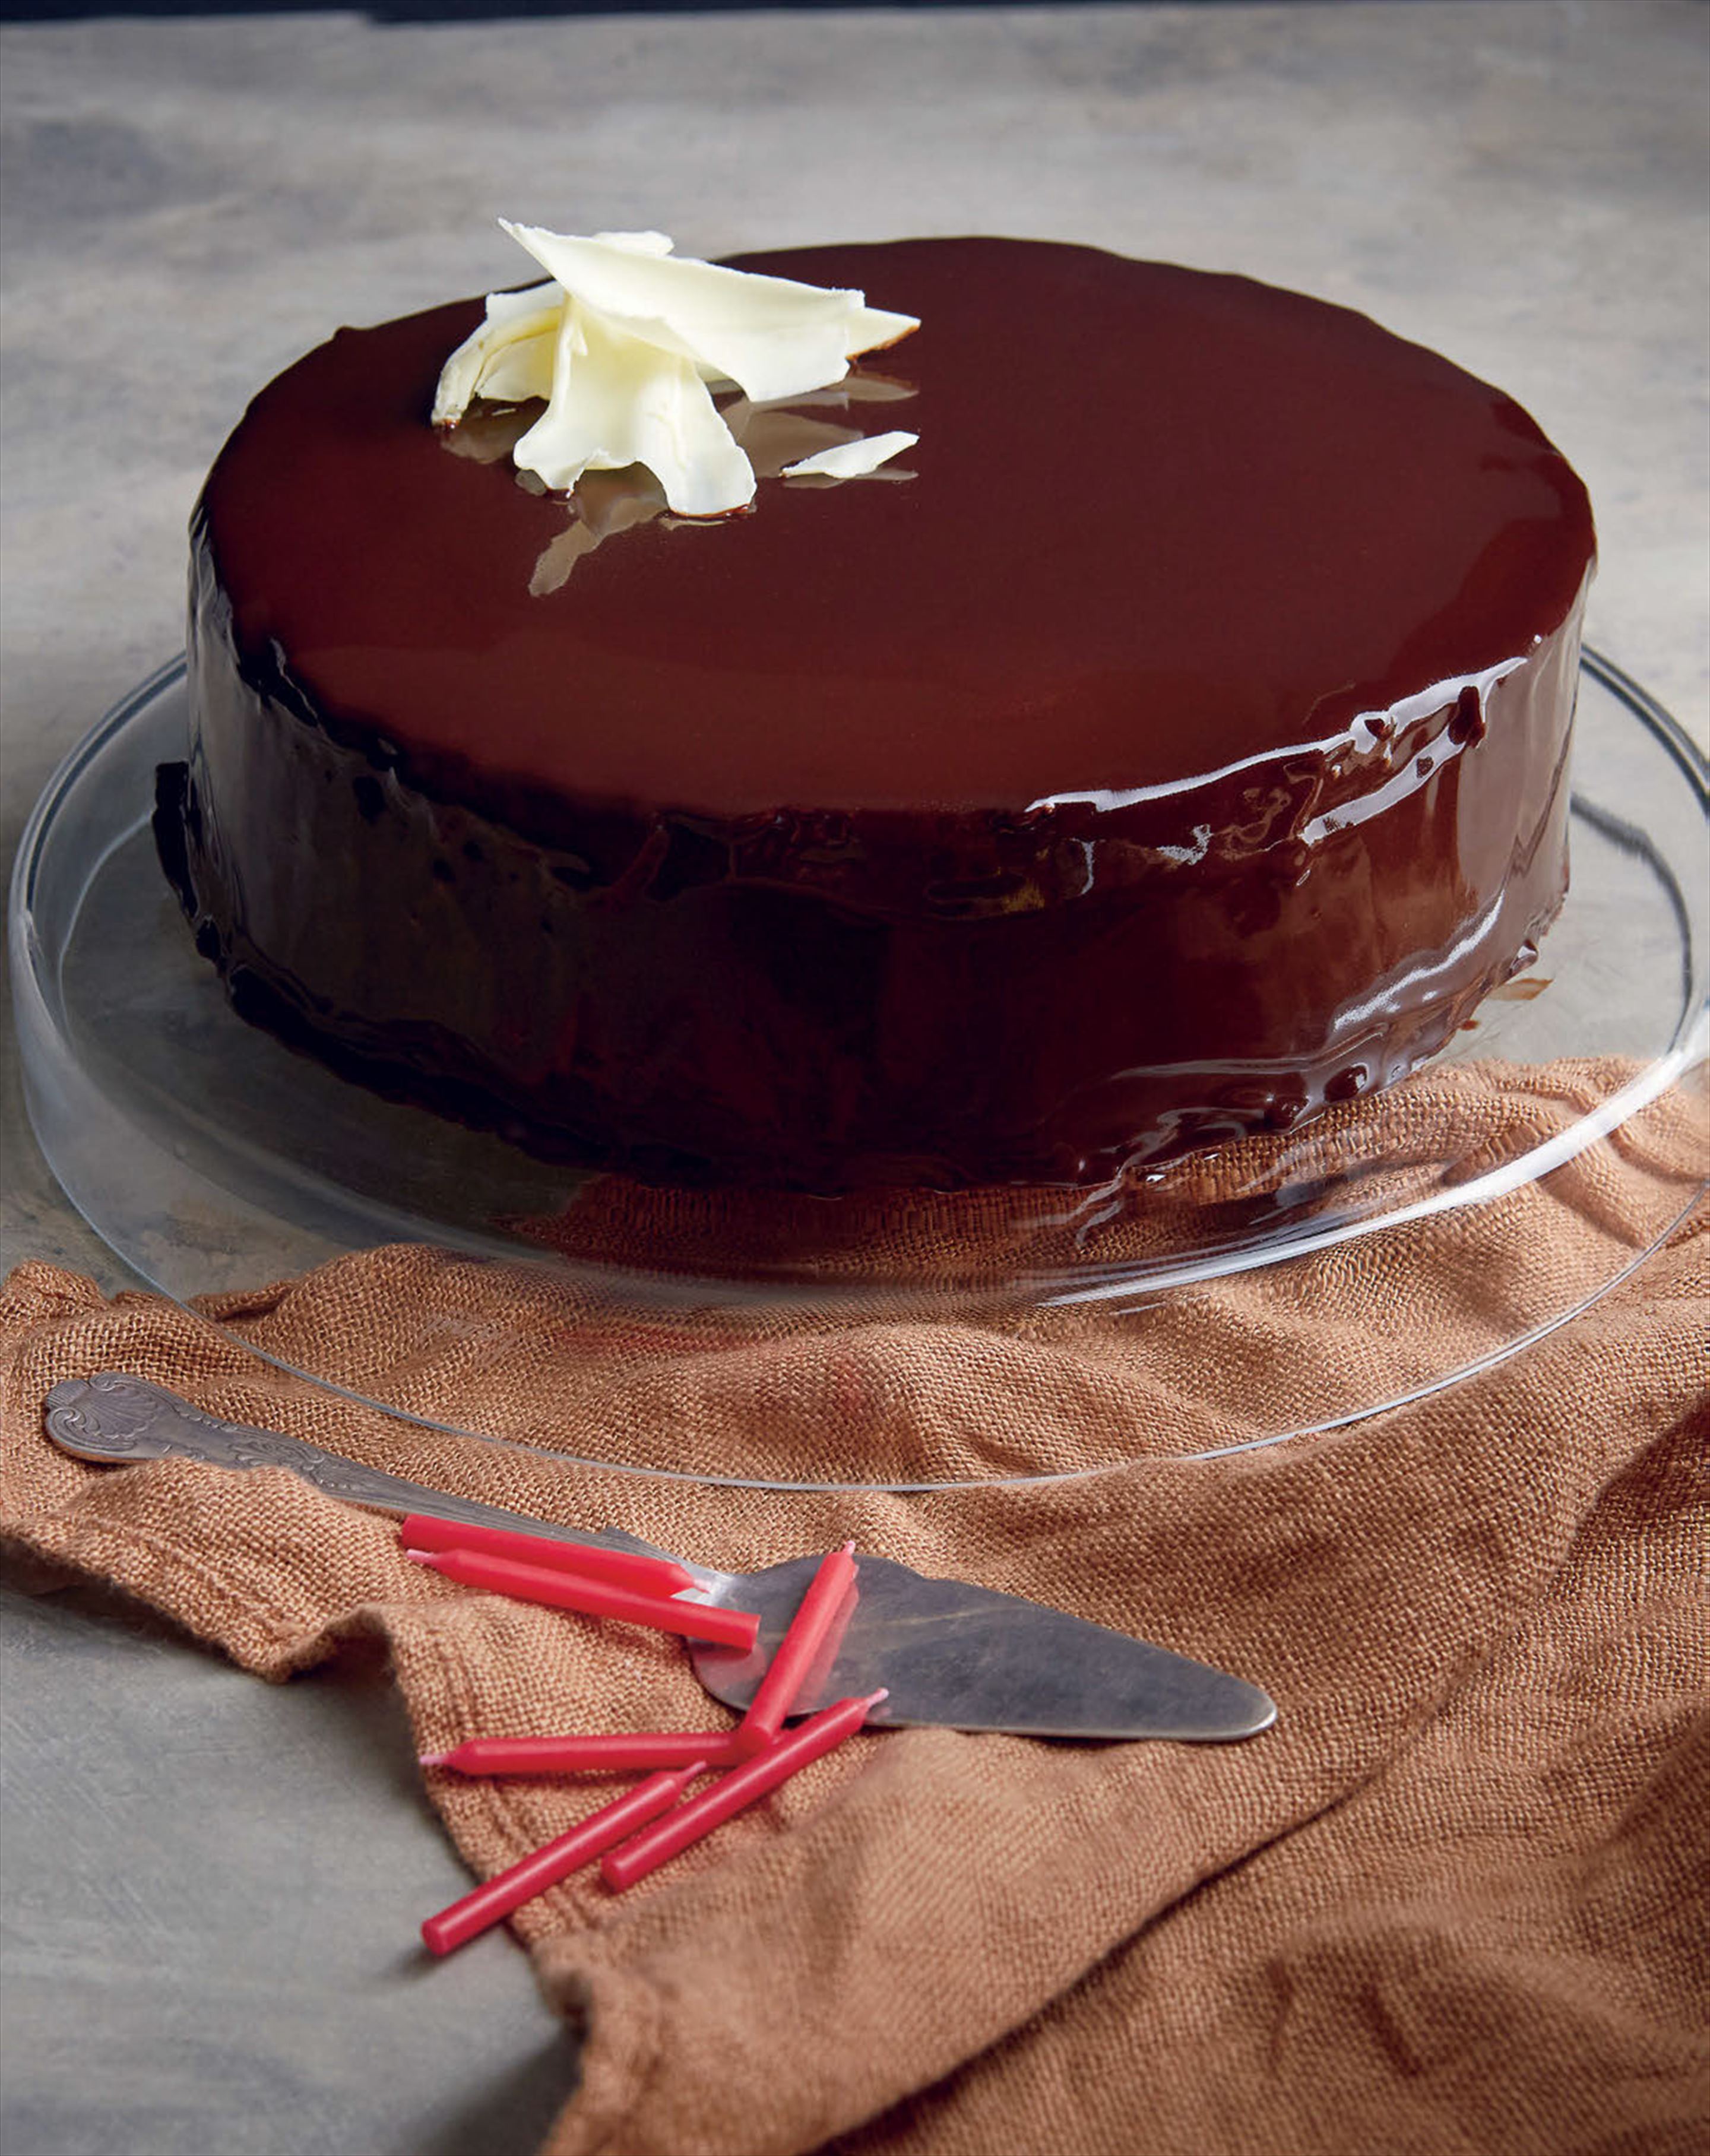 Ultimate chocolate and hazelnut birthday cake